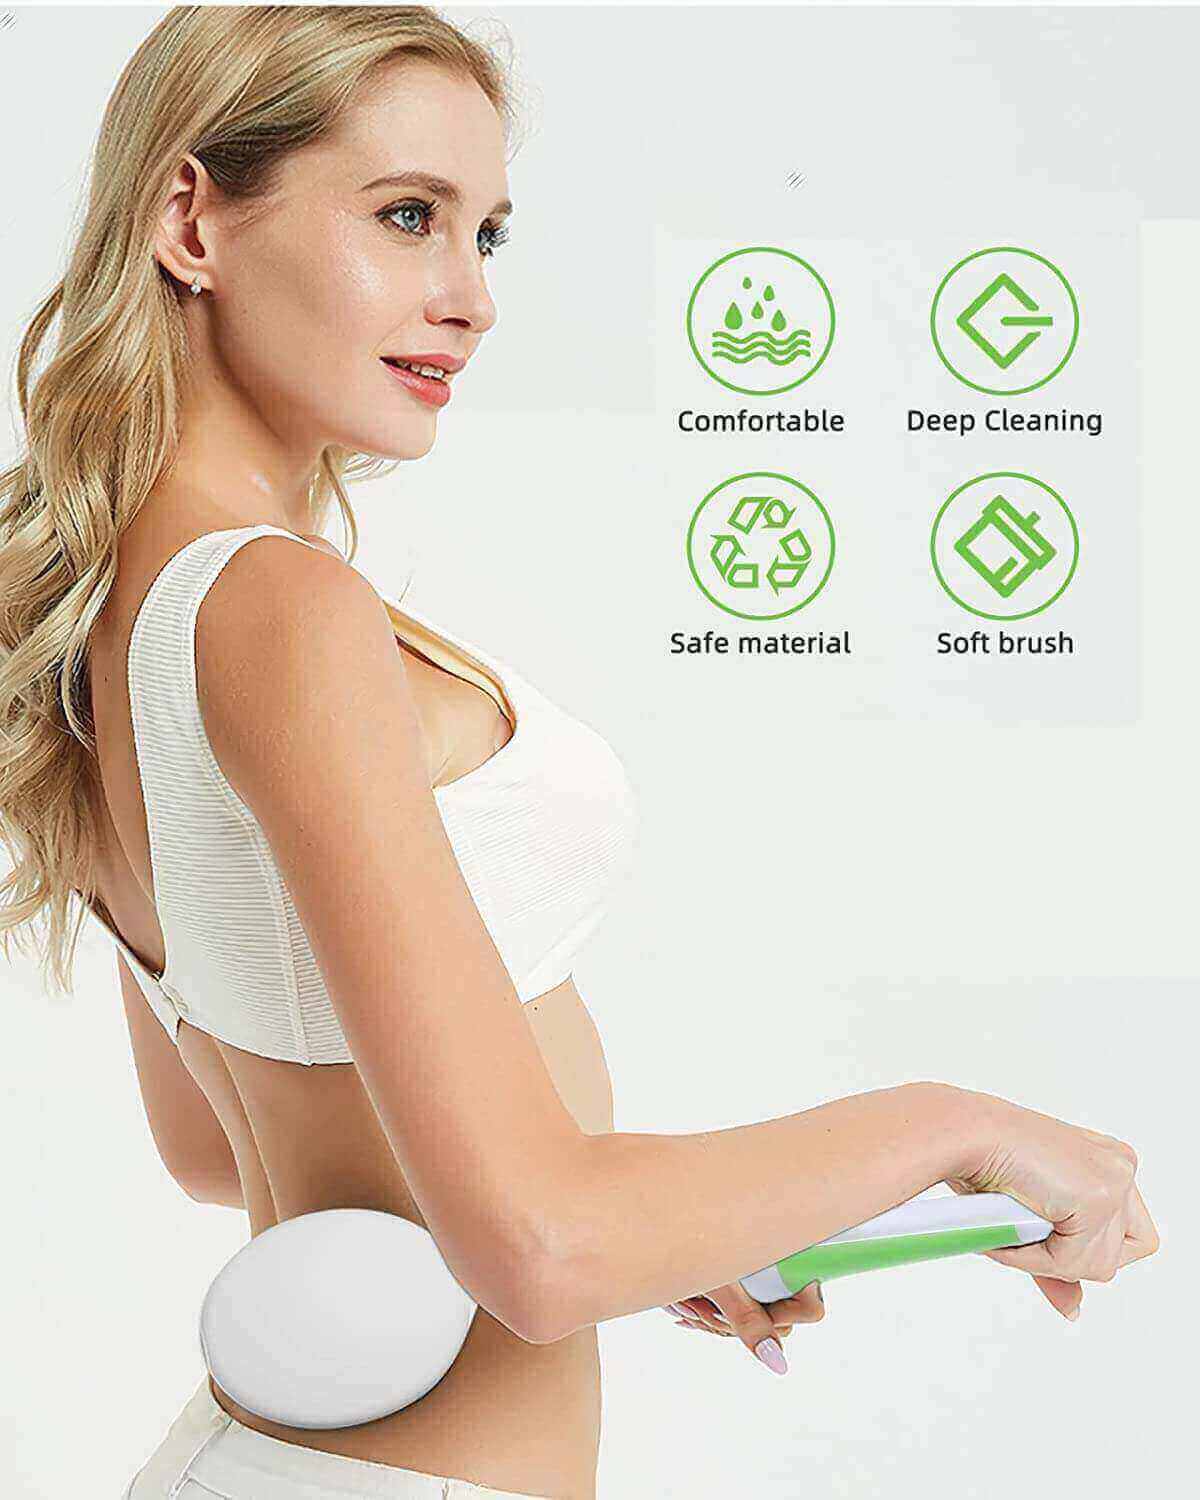 fanwer long-handle curved bath brush for back scrub, a female model is using the item